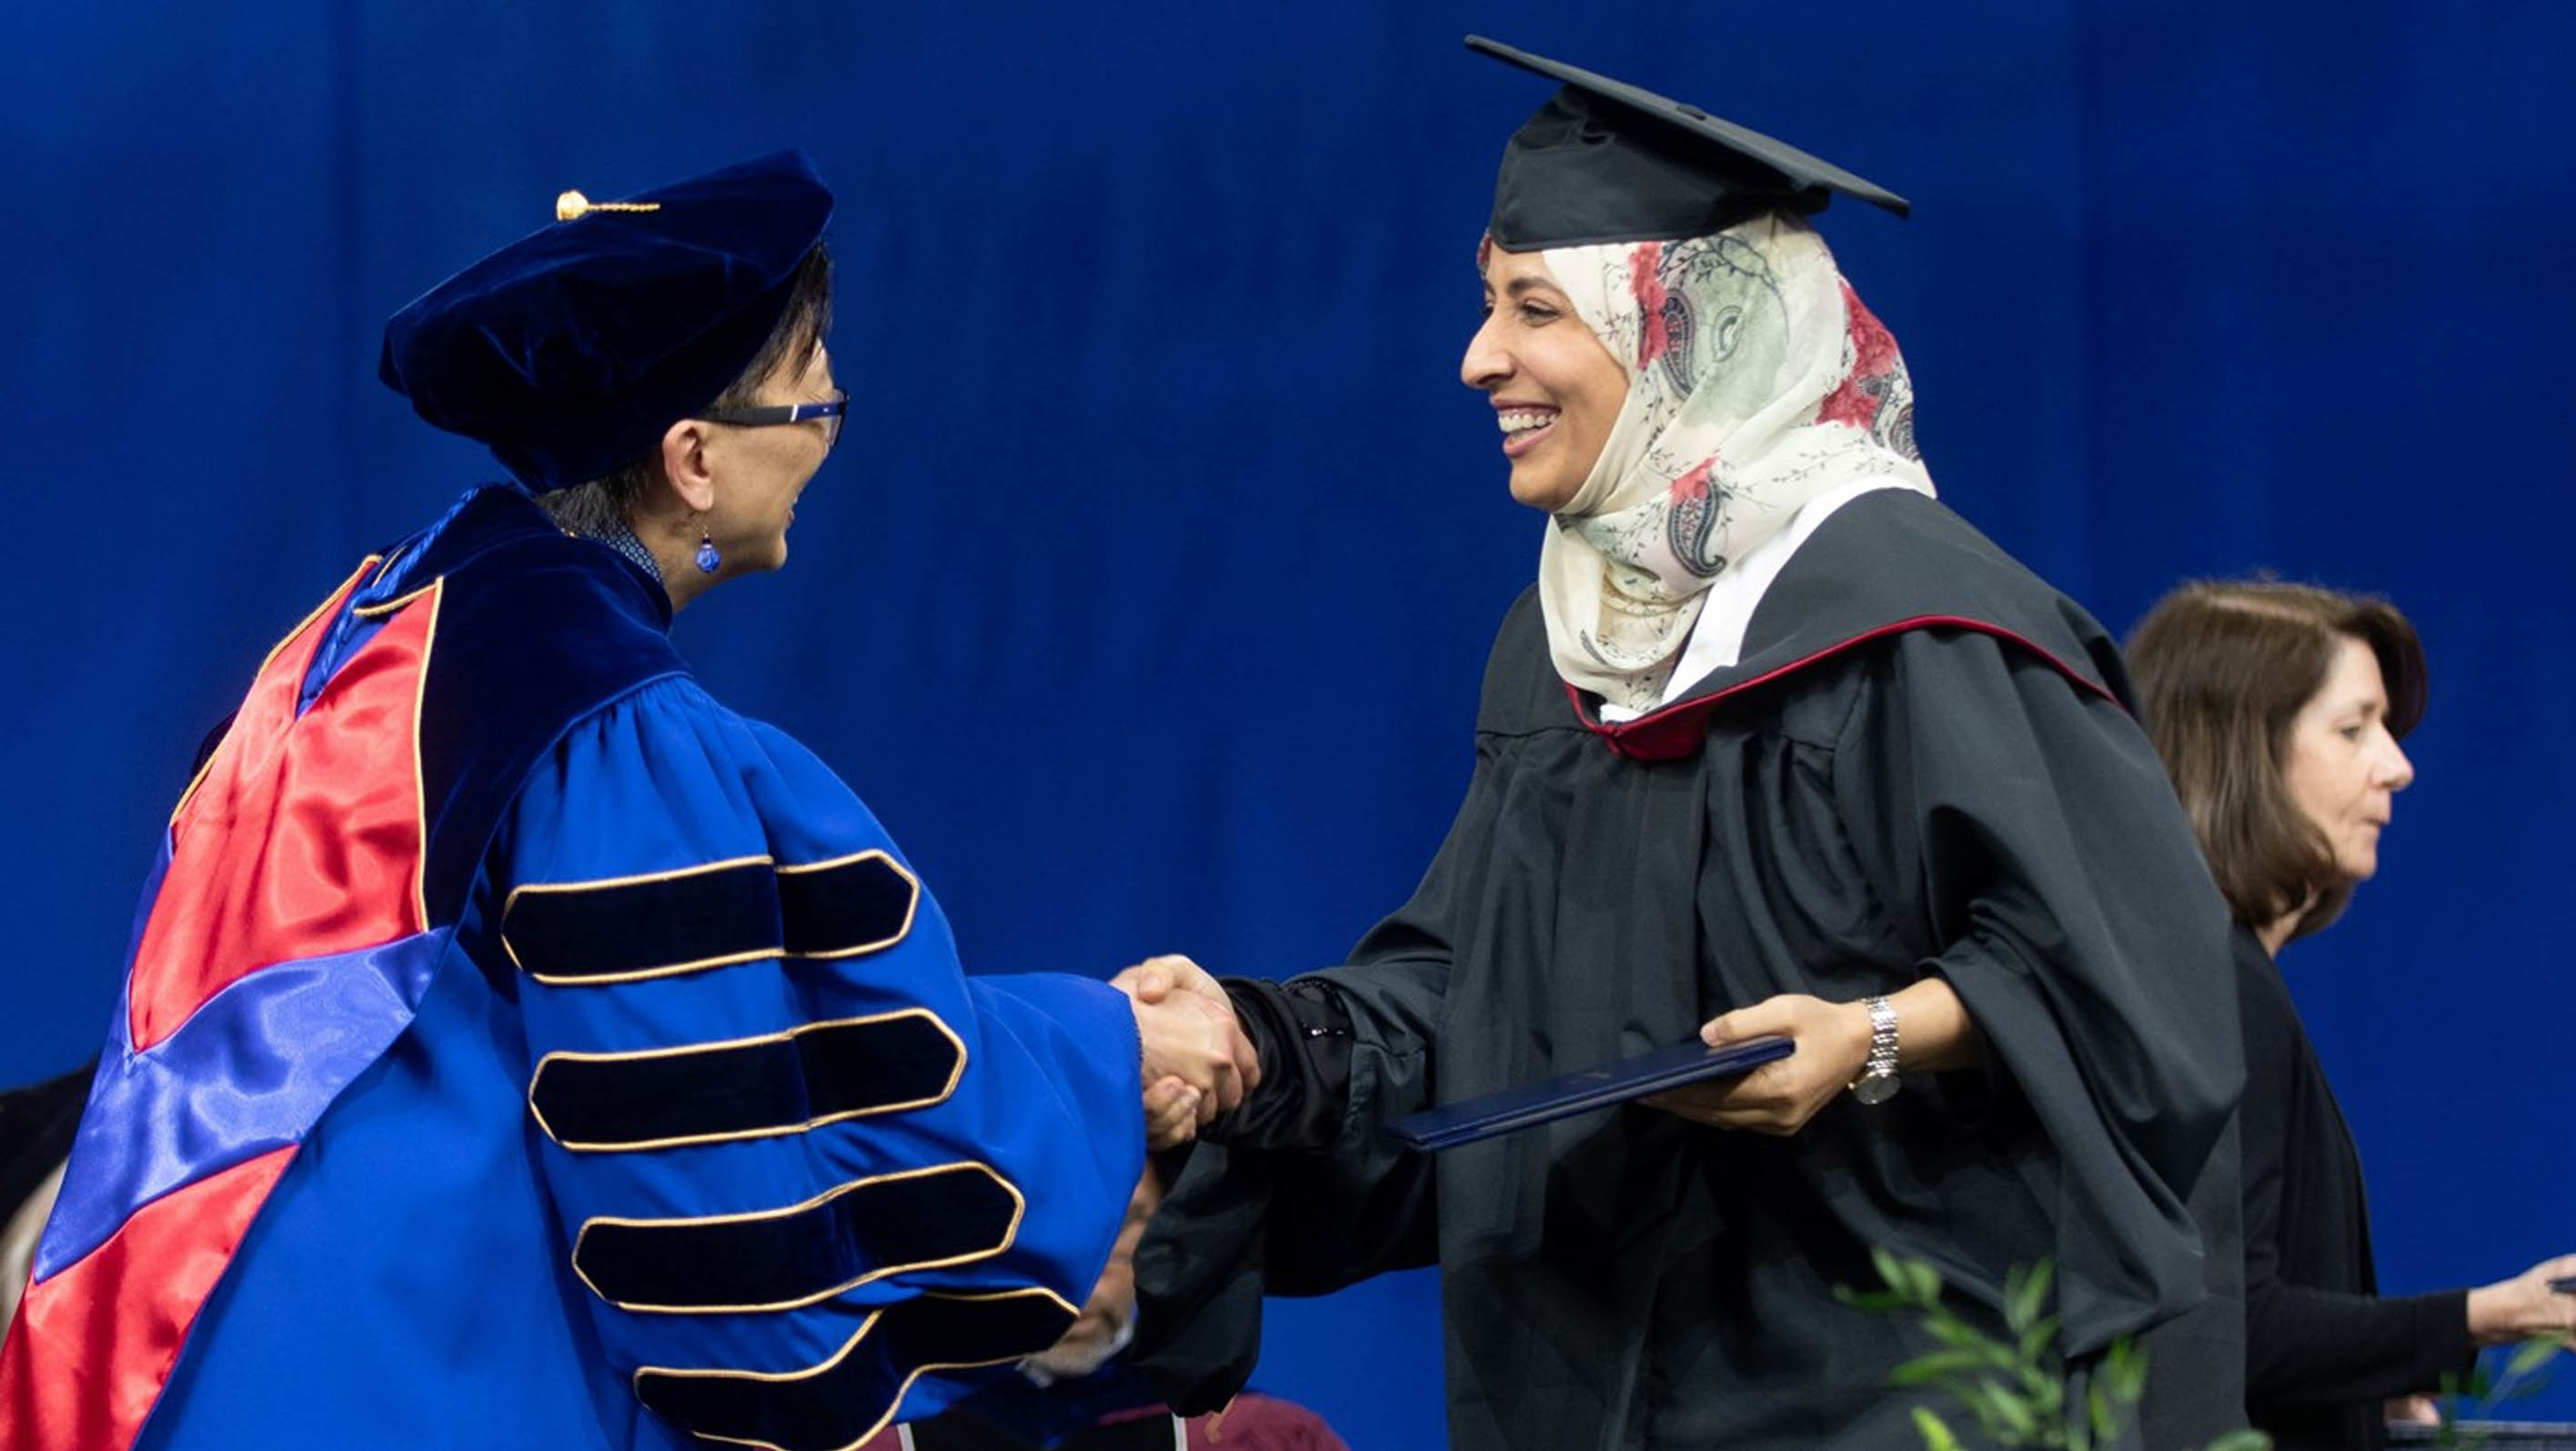 Tawakkol Karman awarded master's degree in global security from UMass Lowell